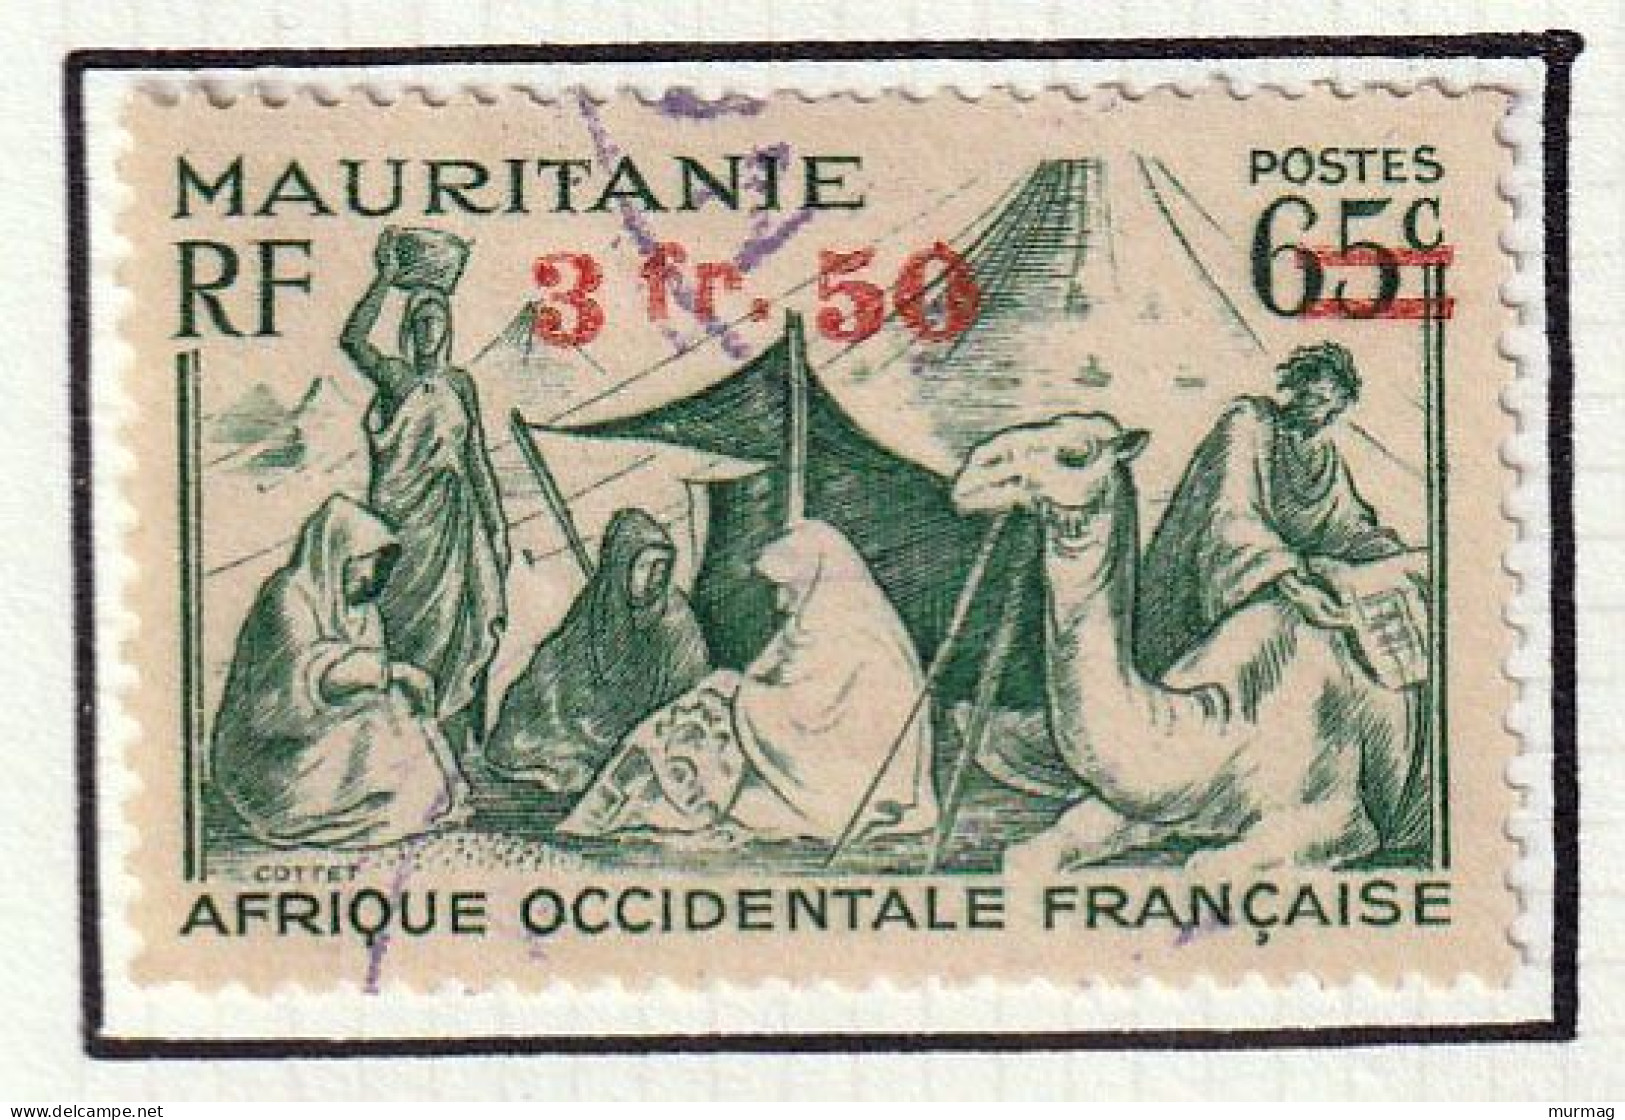 AOF - Mauritanie - Camp, Chameliers - Tb De 1938 Avec Surcharge Rouge : 3F50 - Y&T N° 133 - 1944 - Oblitéré - Used Stamps